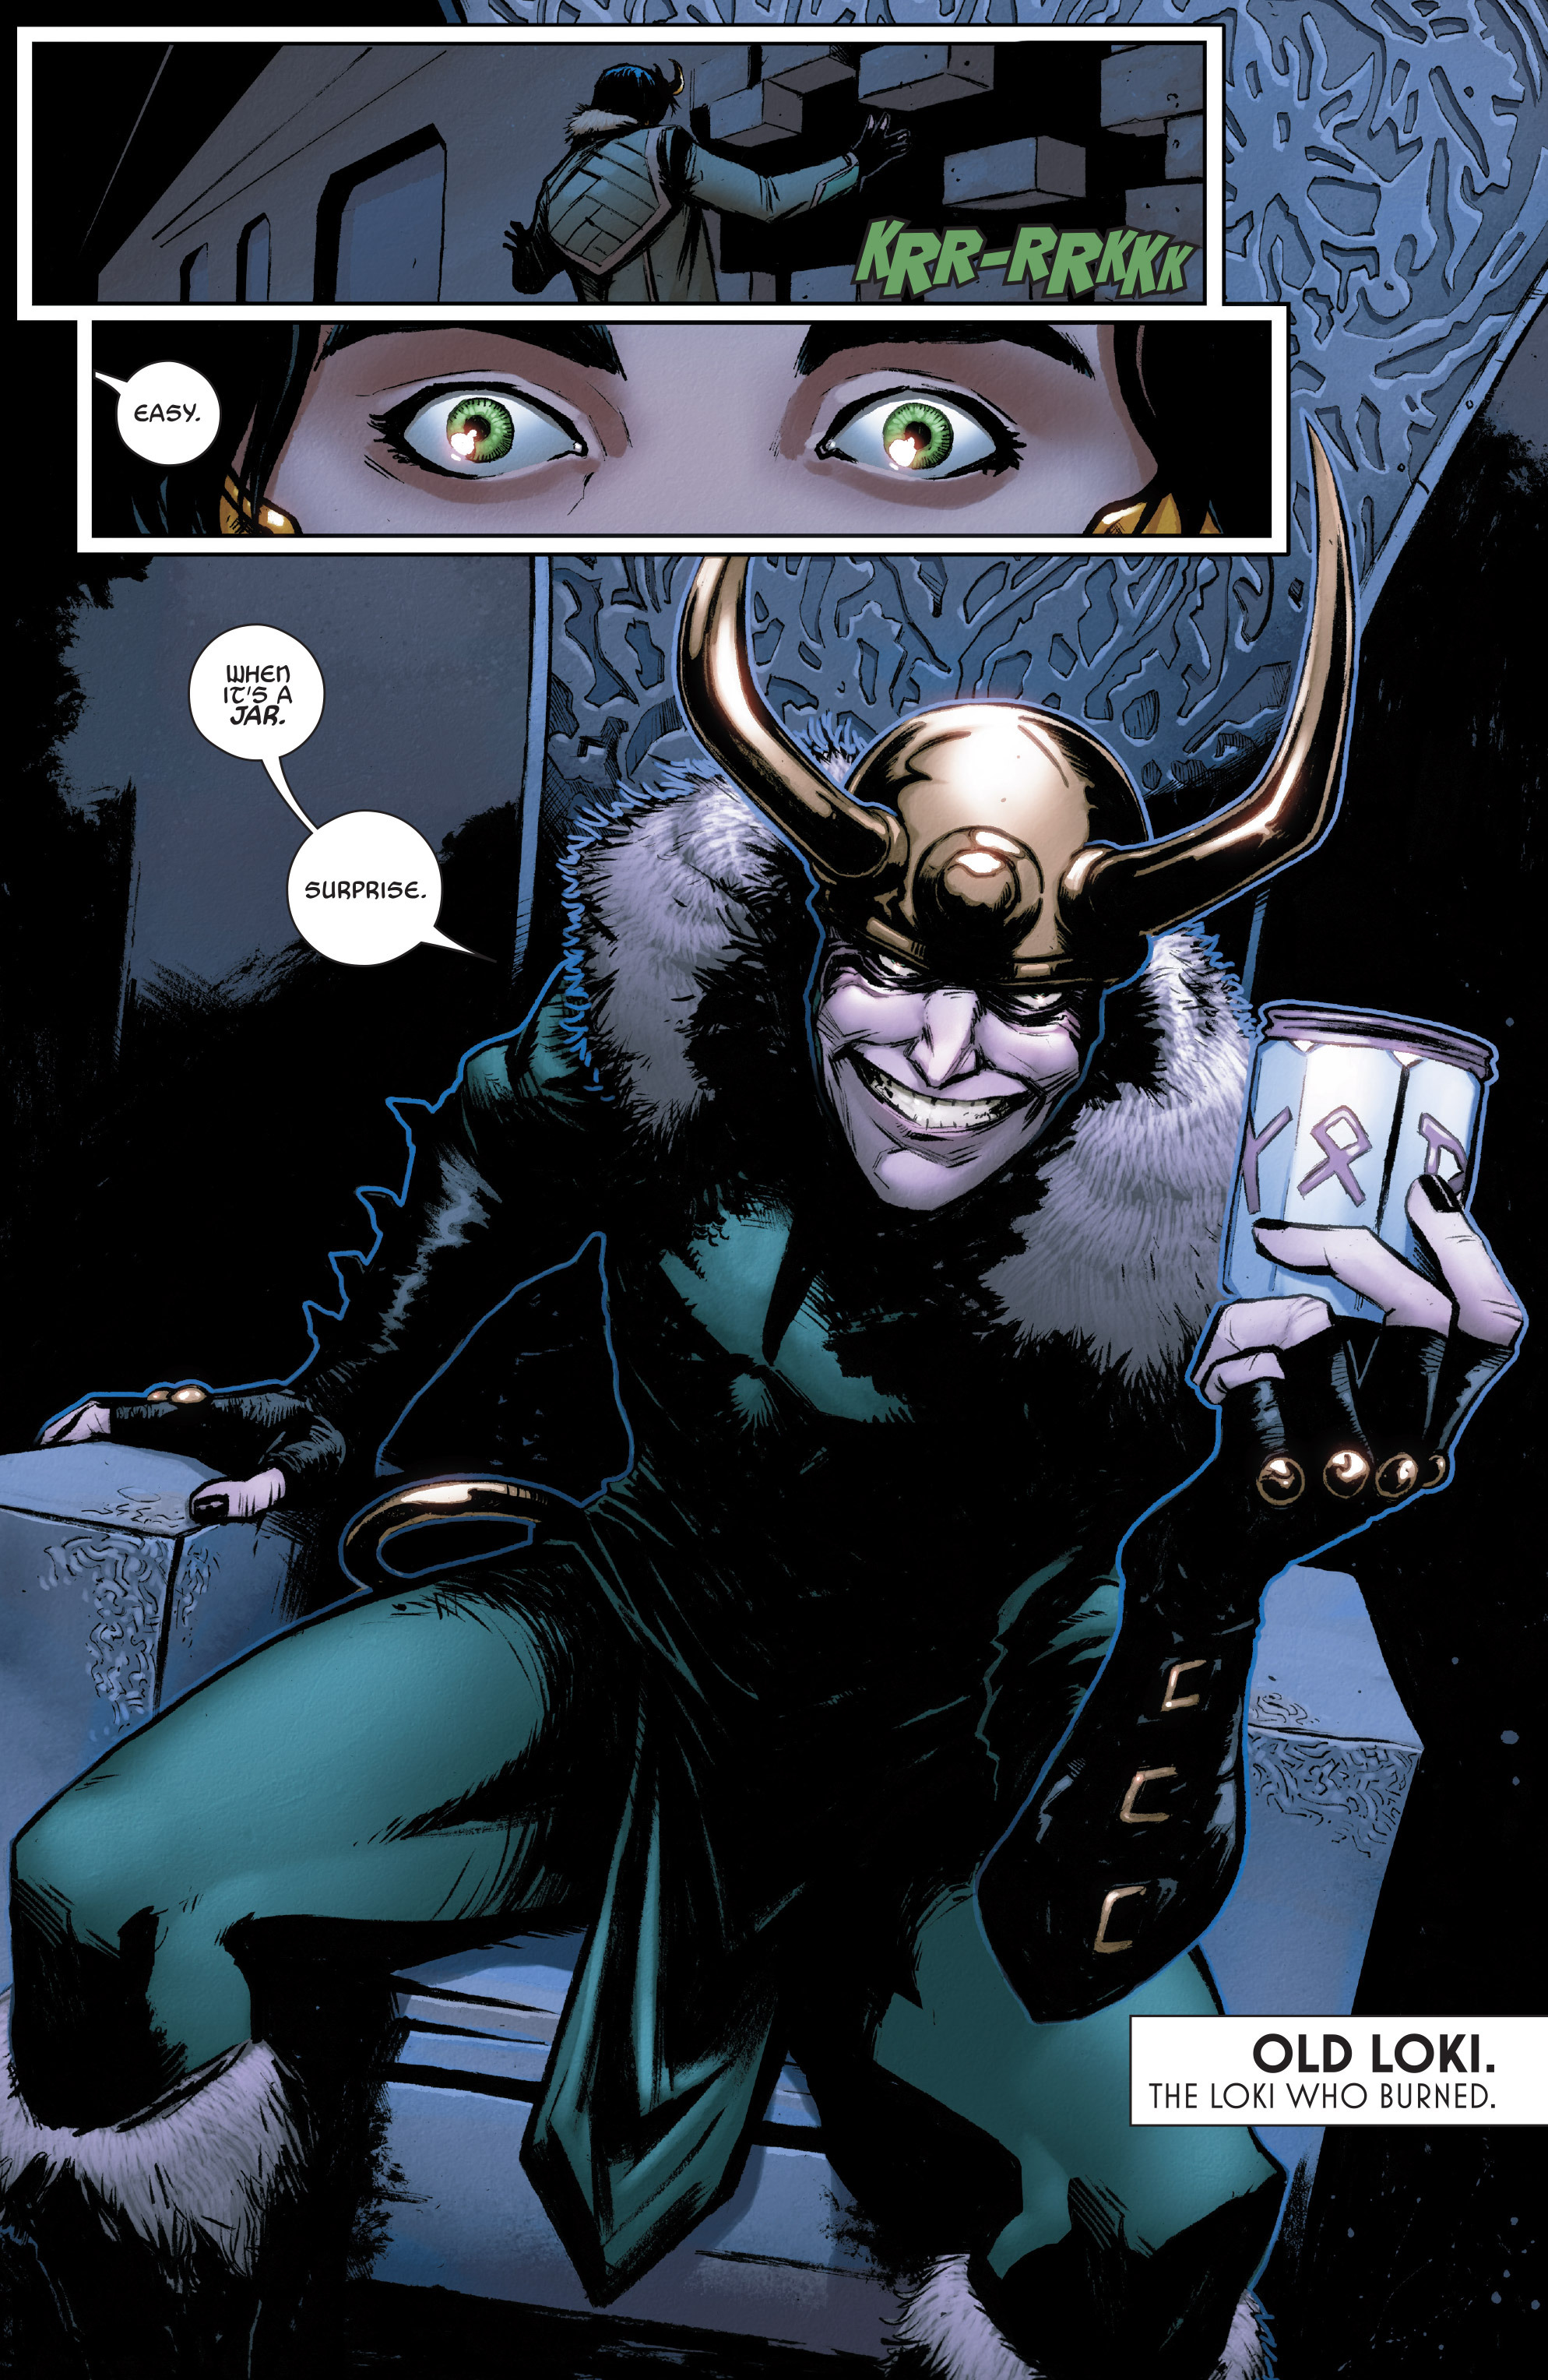 Loki Agent of Asgard Issue 5 | Viewcomic reading comics ...